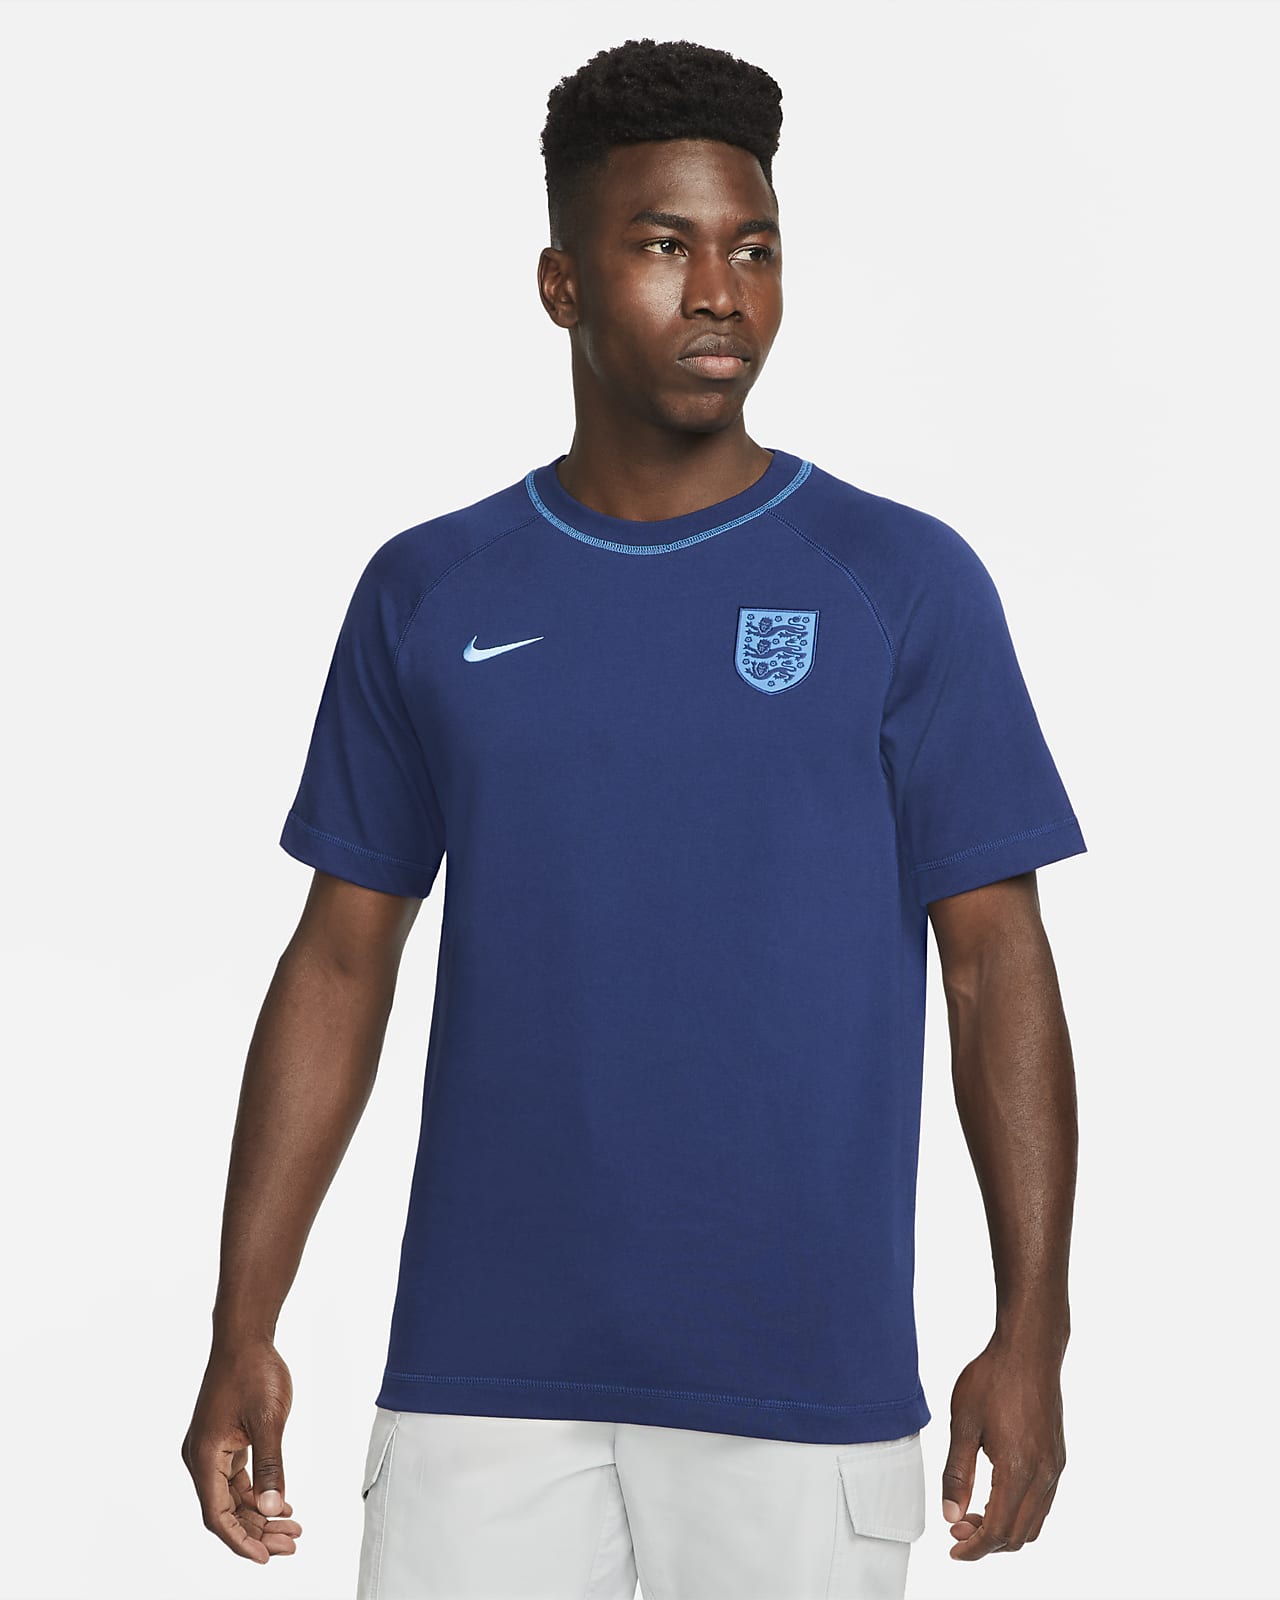 England Men's Nike Football Top